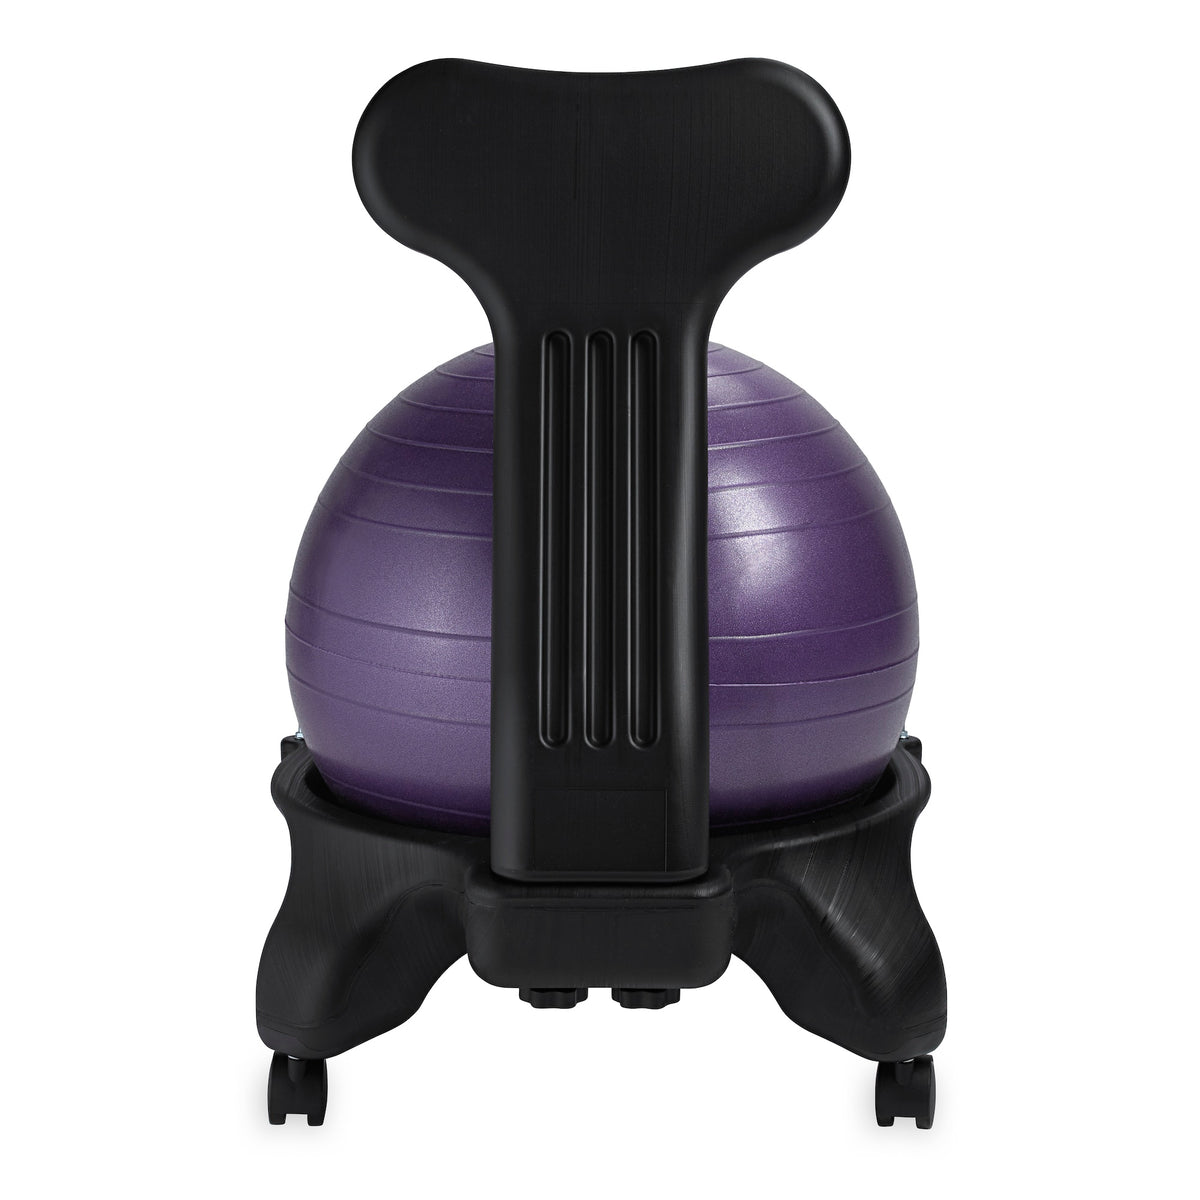 Gaiam Classic Balance Ball® Chair purple back